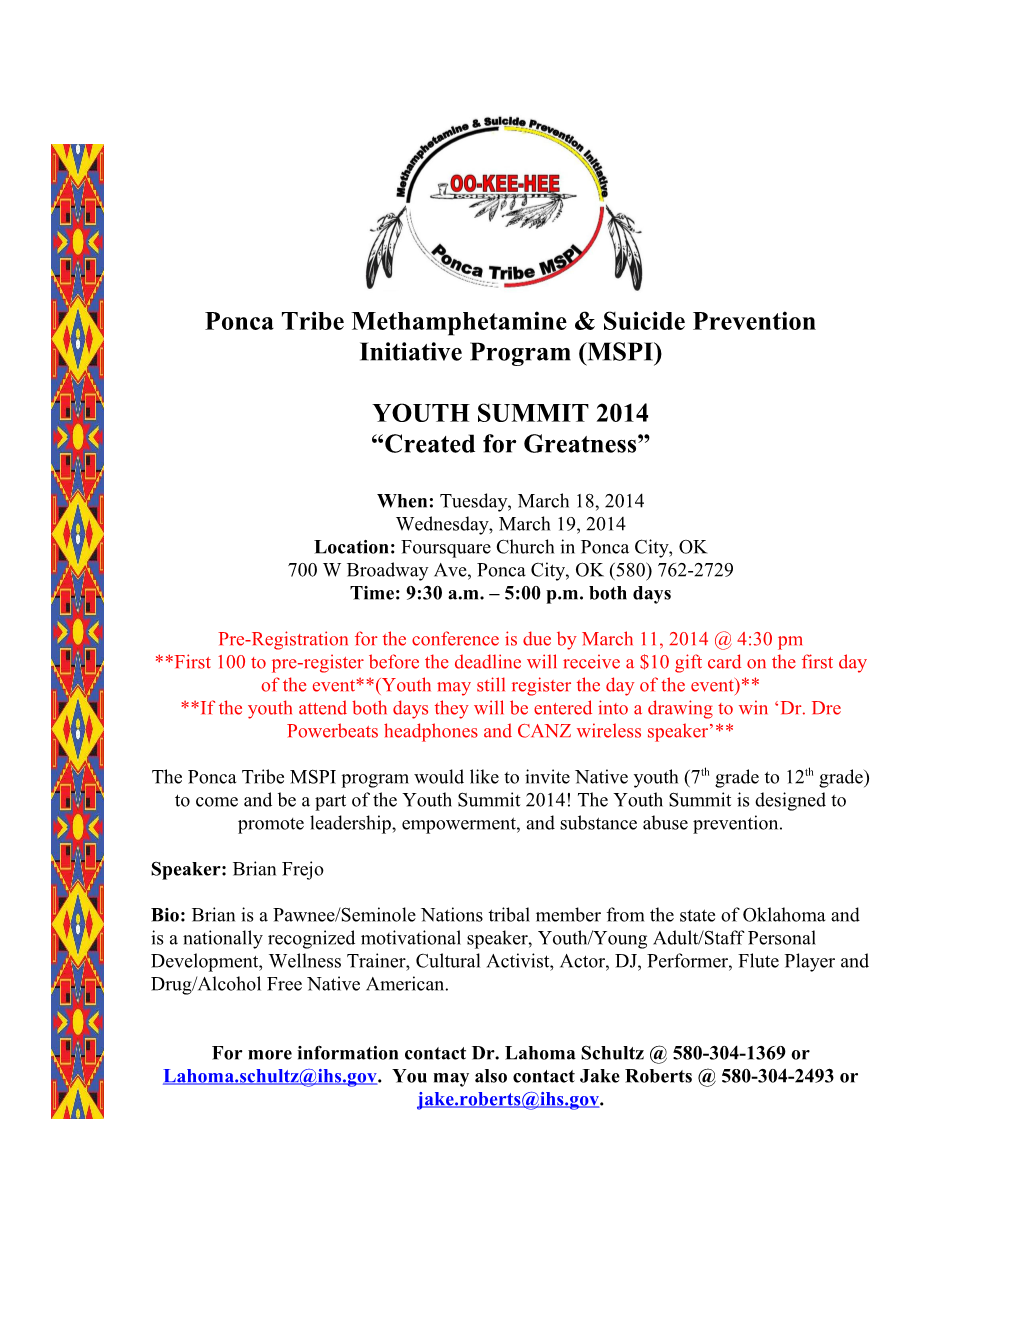 Ponca Tribe Methamphetamine & Suicide Prevention Initiative Program (MSPI)